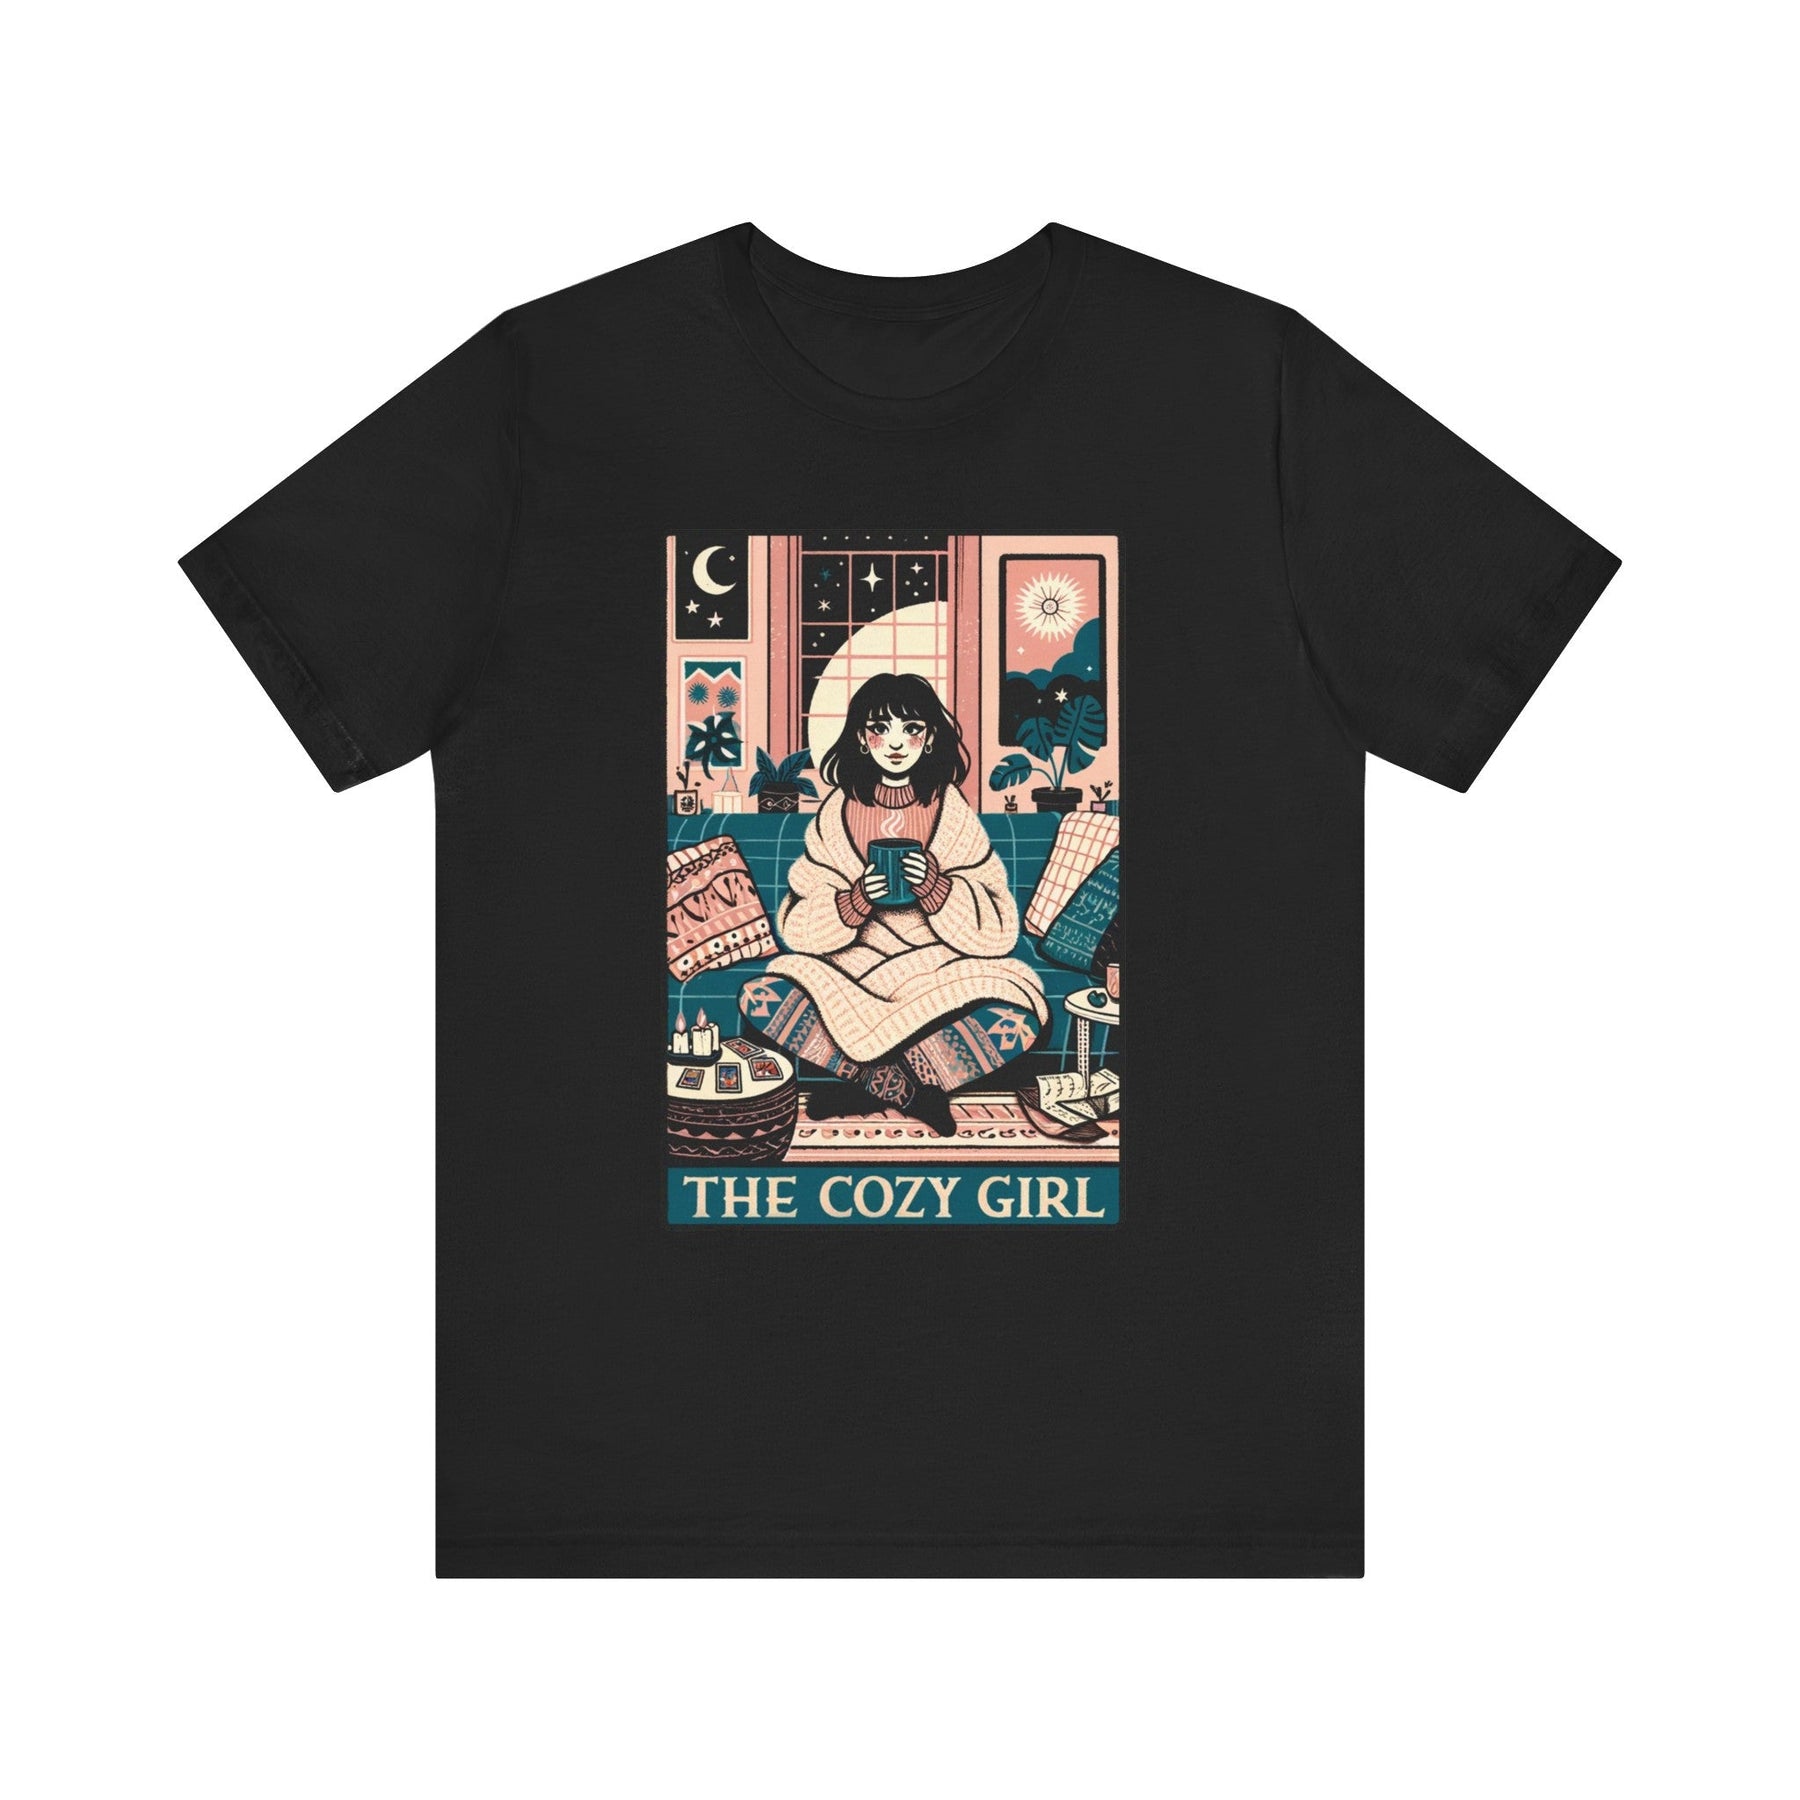 The Cozy Girl Night Tarot Card Short Sleeve Tee - Goth Cloth Co.T - Shirt21210570242916060301